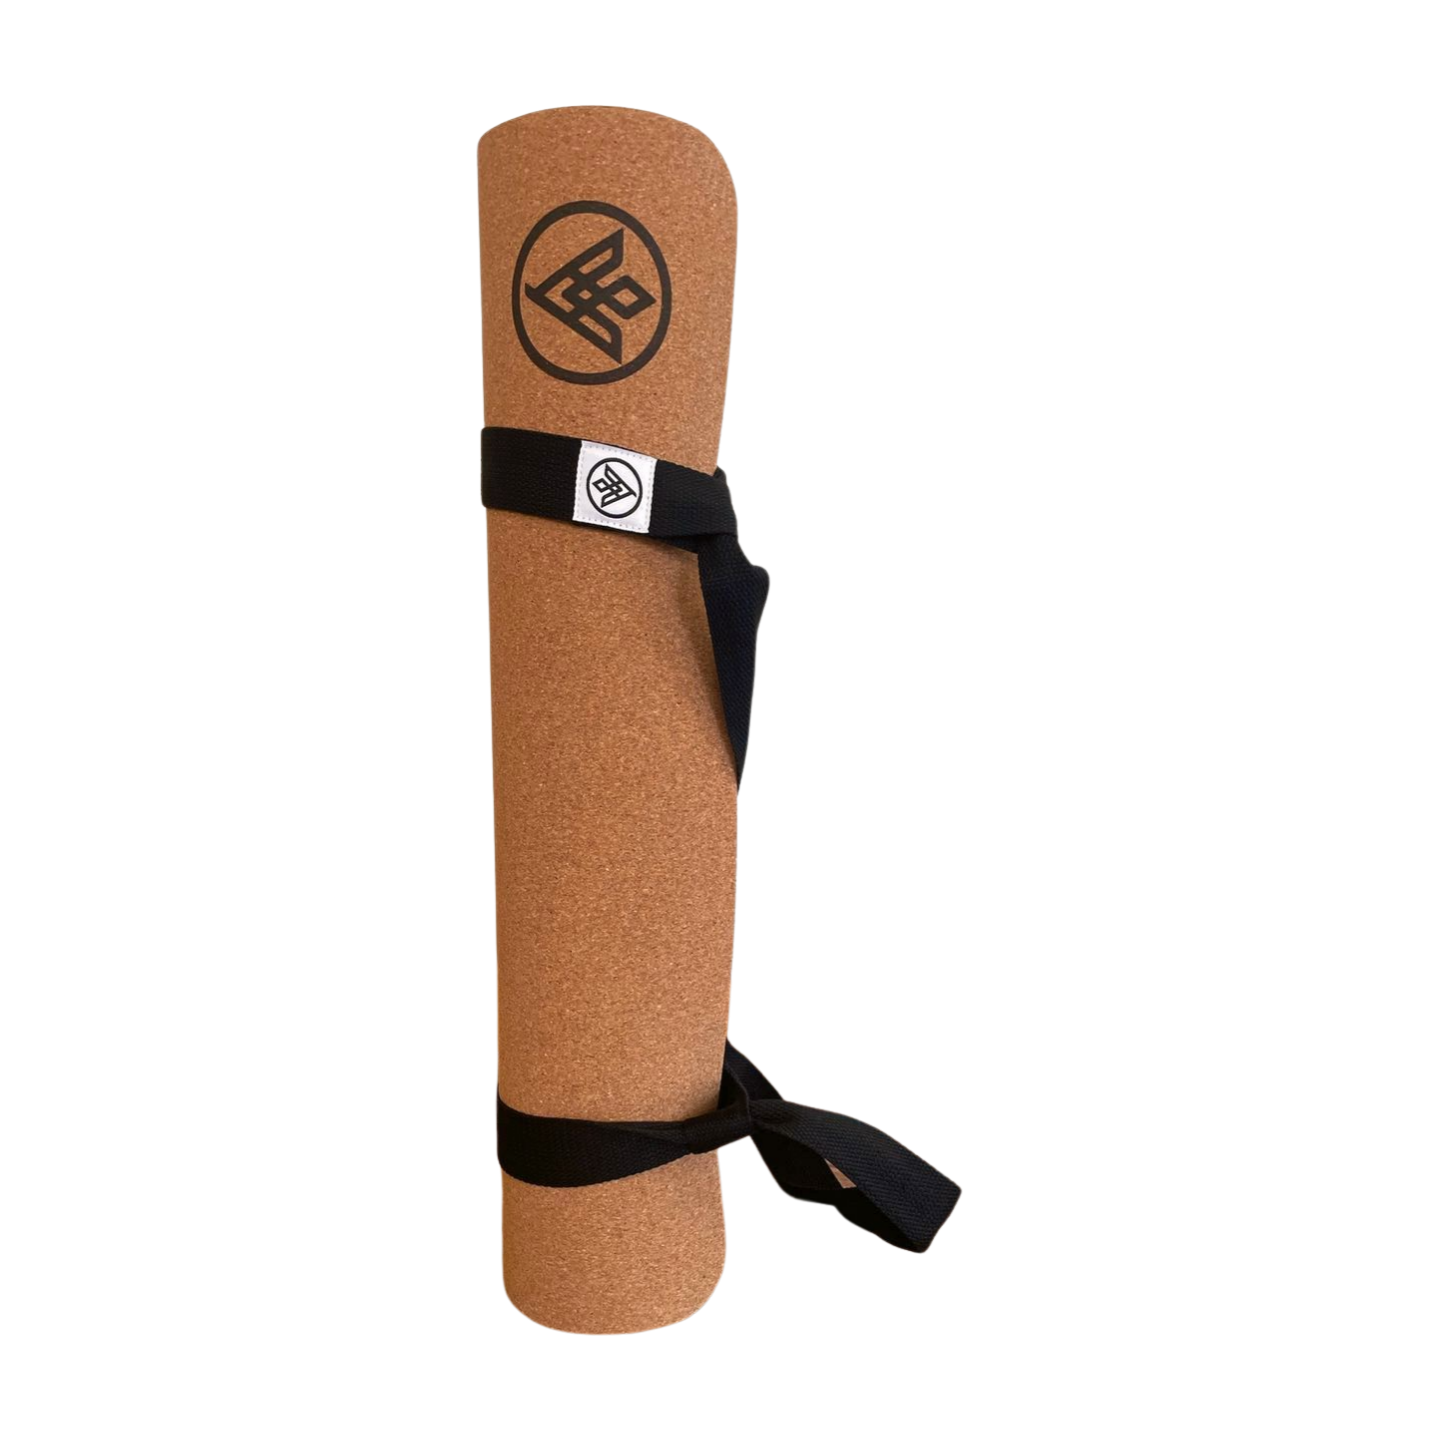  Awpeye Yoga Mat Strap Carrier 2Pack Adjustable Yoga